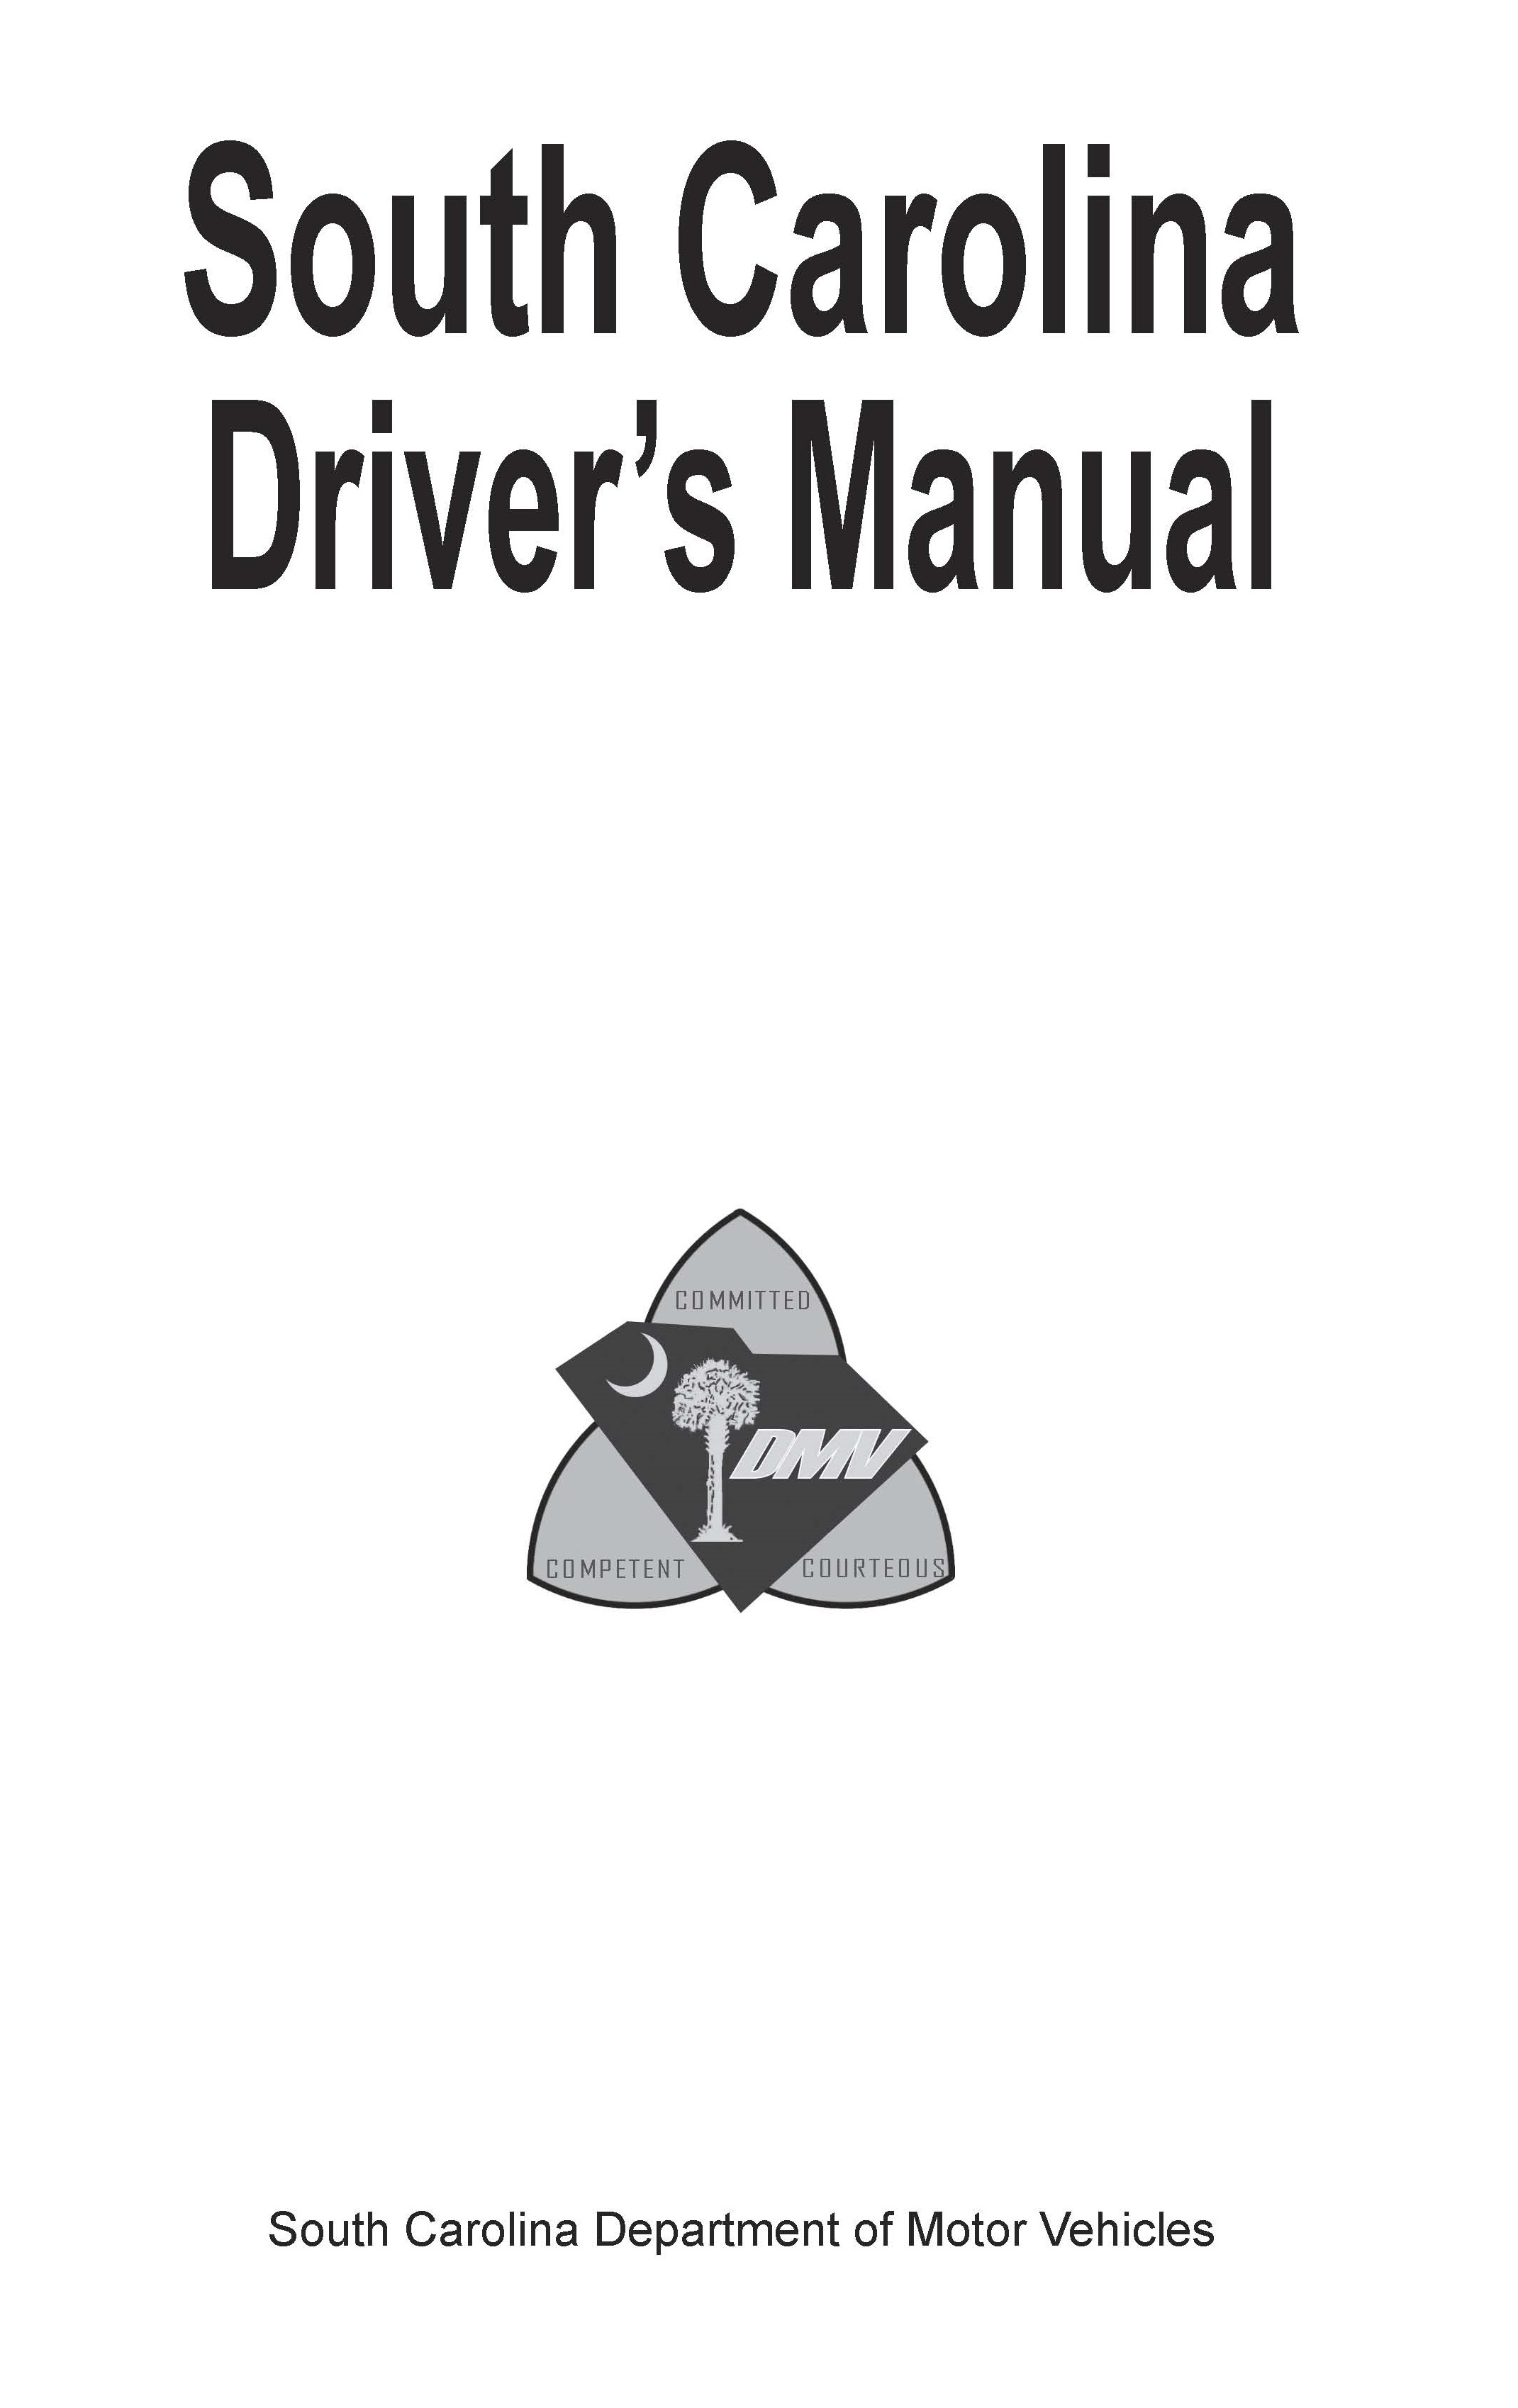 South Carolina Driver Manual_Page_001.jpg